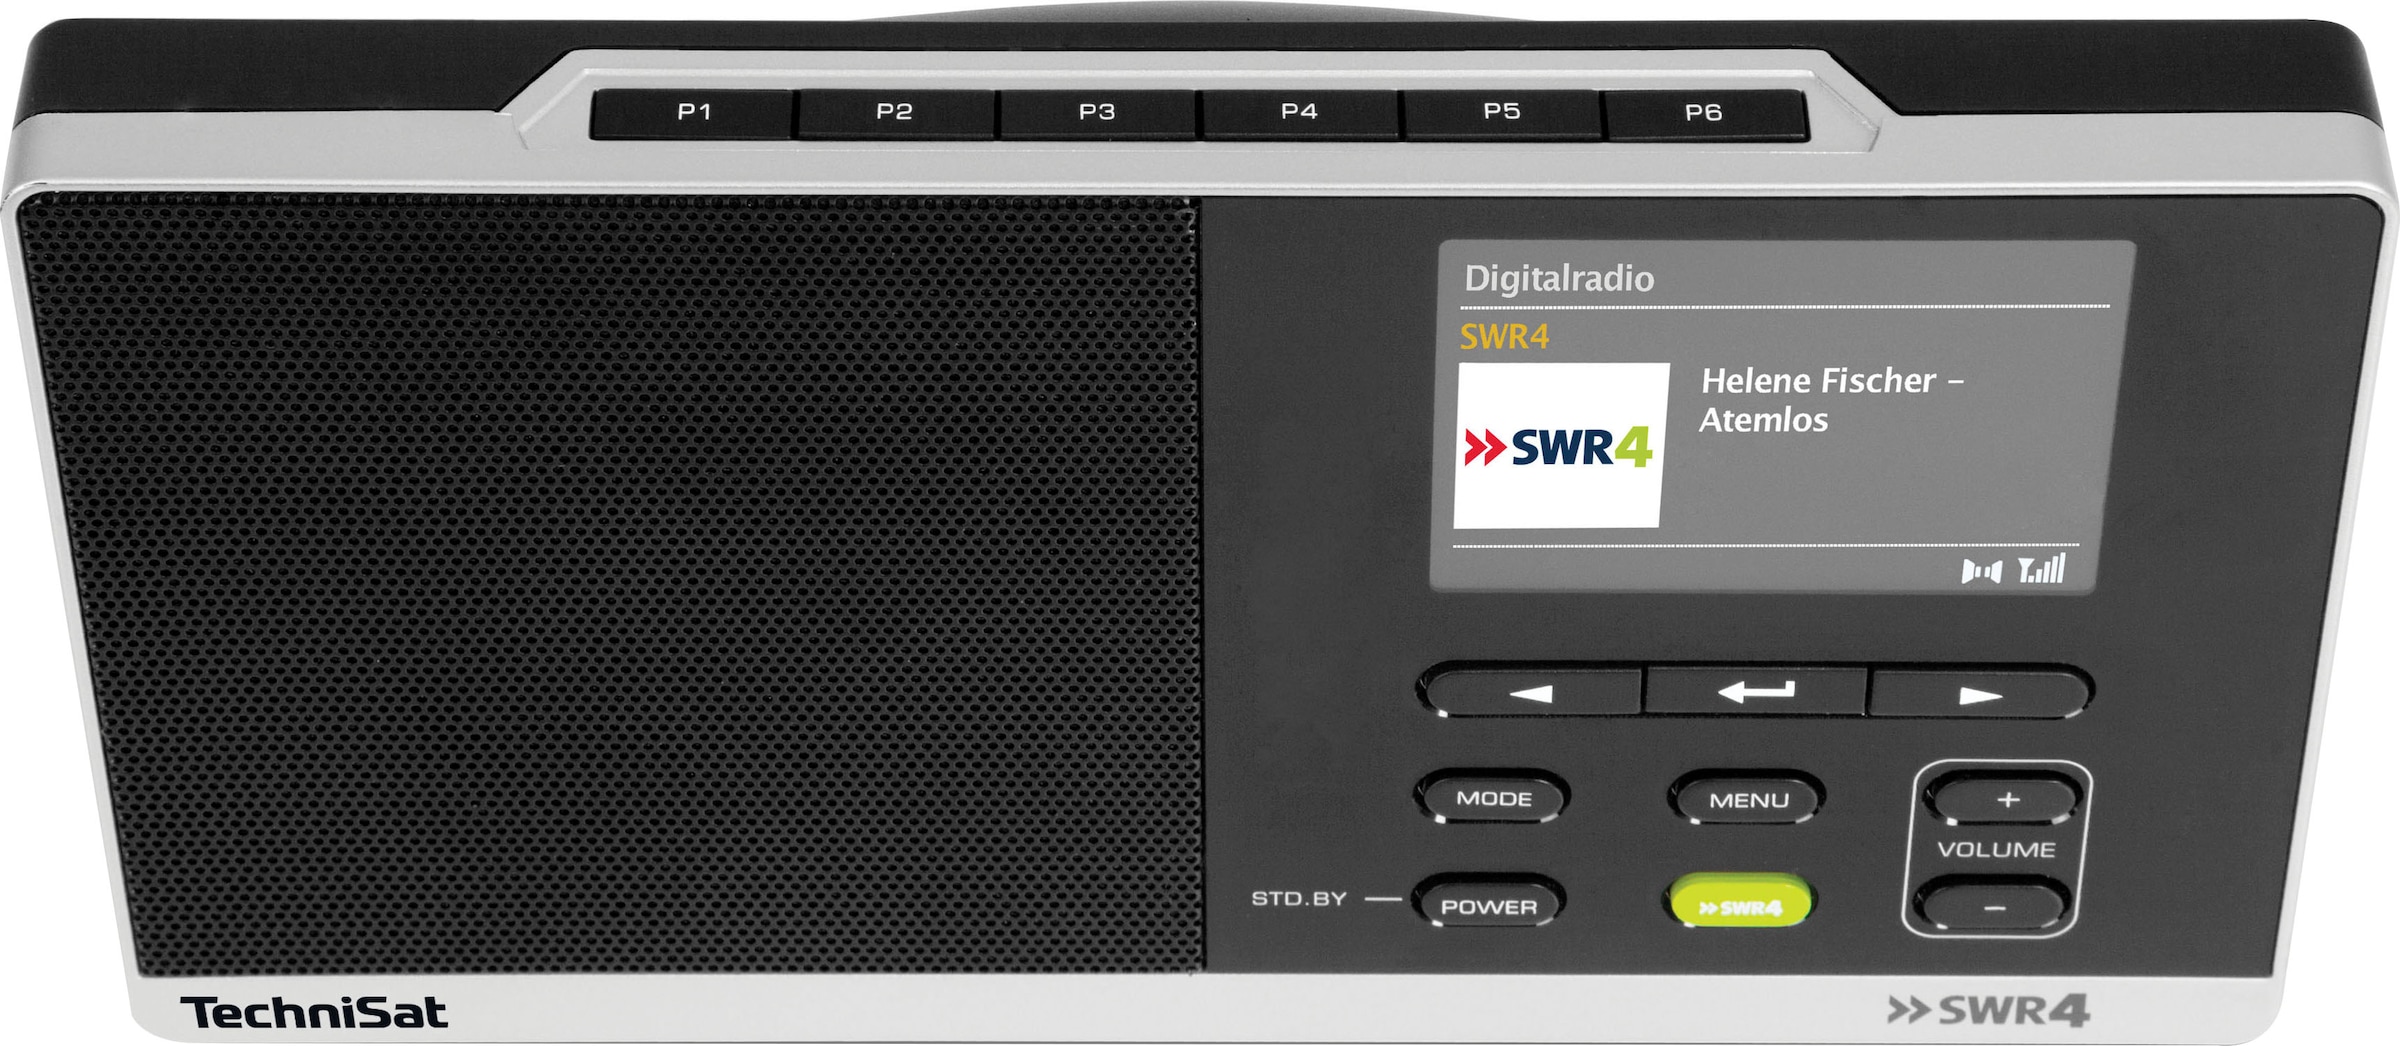 SWR4 (DAB+) Edition«, (DAB+) RDS- TechniSat Digitalradio (UKW mit | BAUR Digitalradio 215 W) 1 »DIGITRADIO